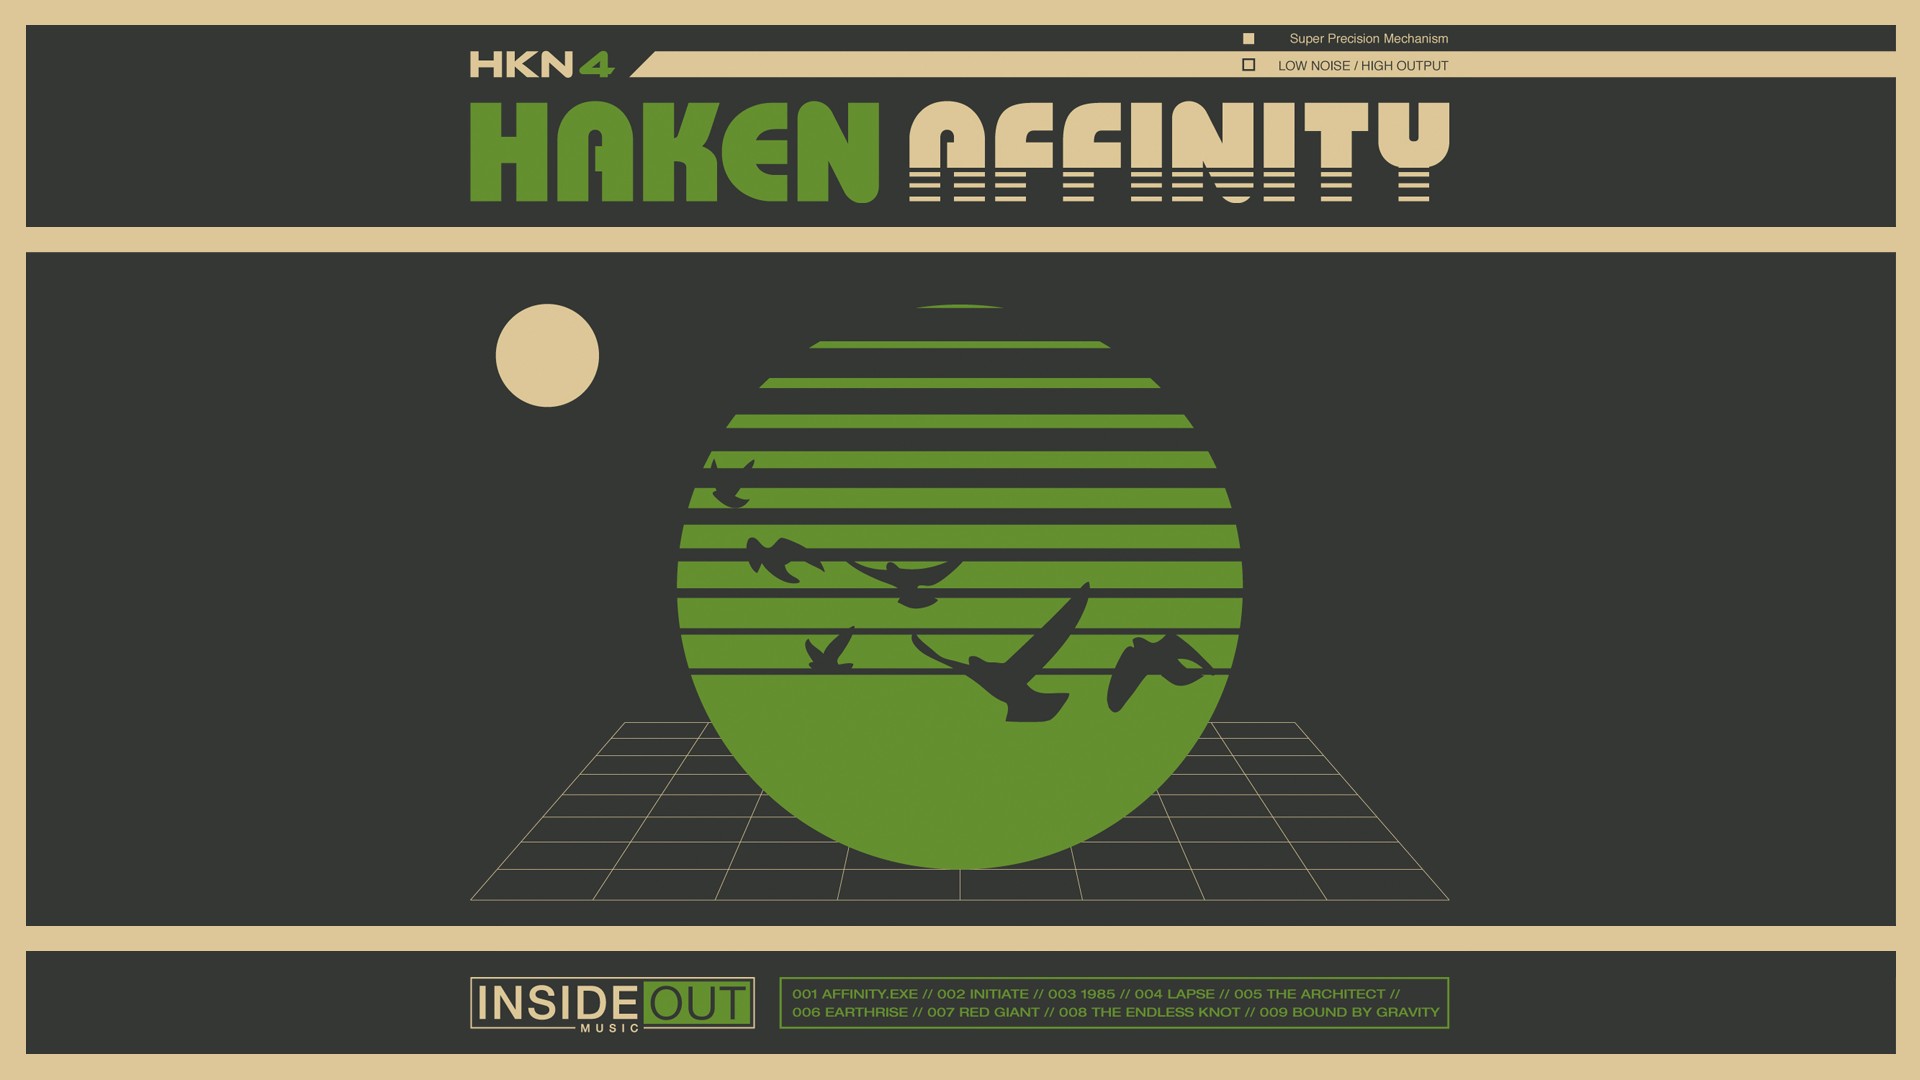 Haken Music Progressive Rock Progressive Metal Album Covers Cover Art Affinity Wallpapers Hd Desktop And Mobile Backgrounds